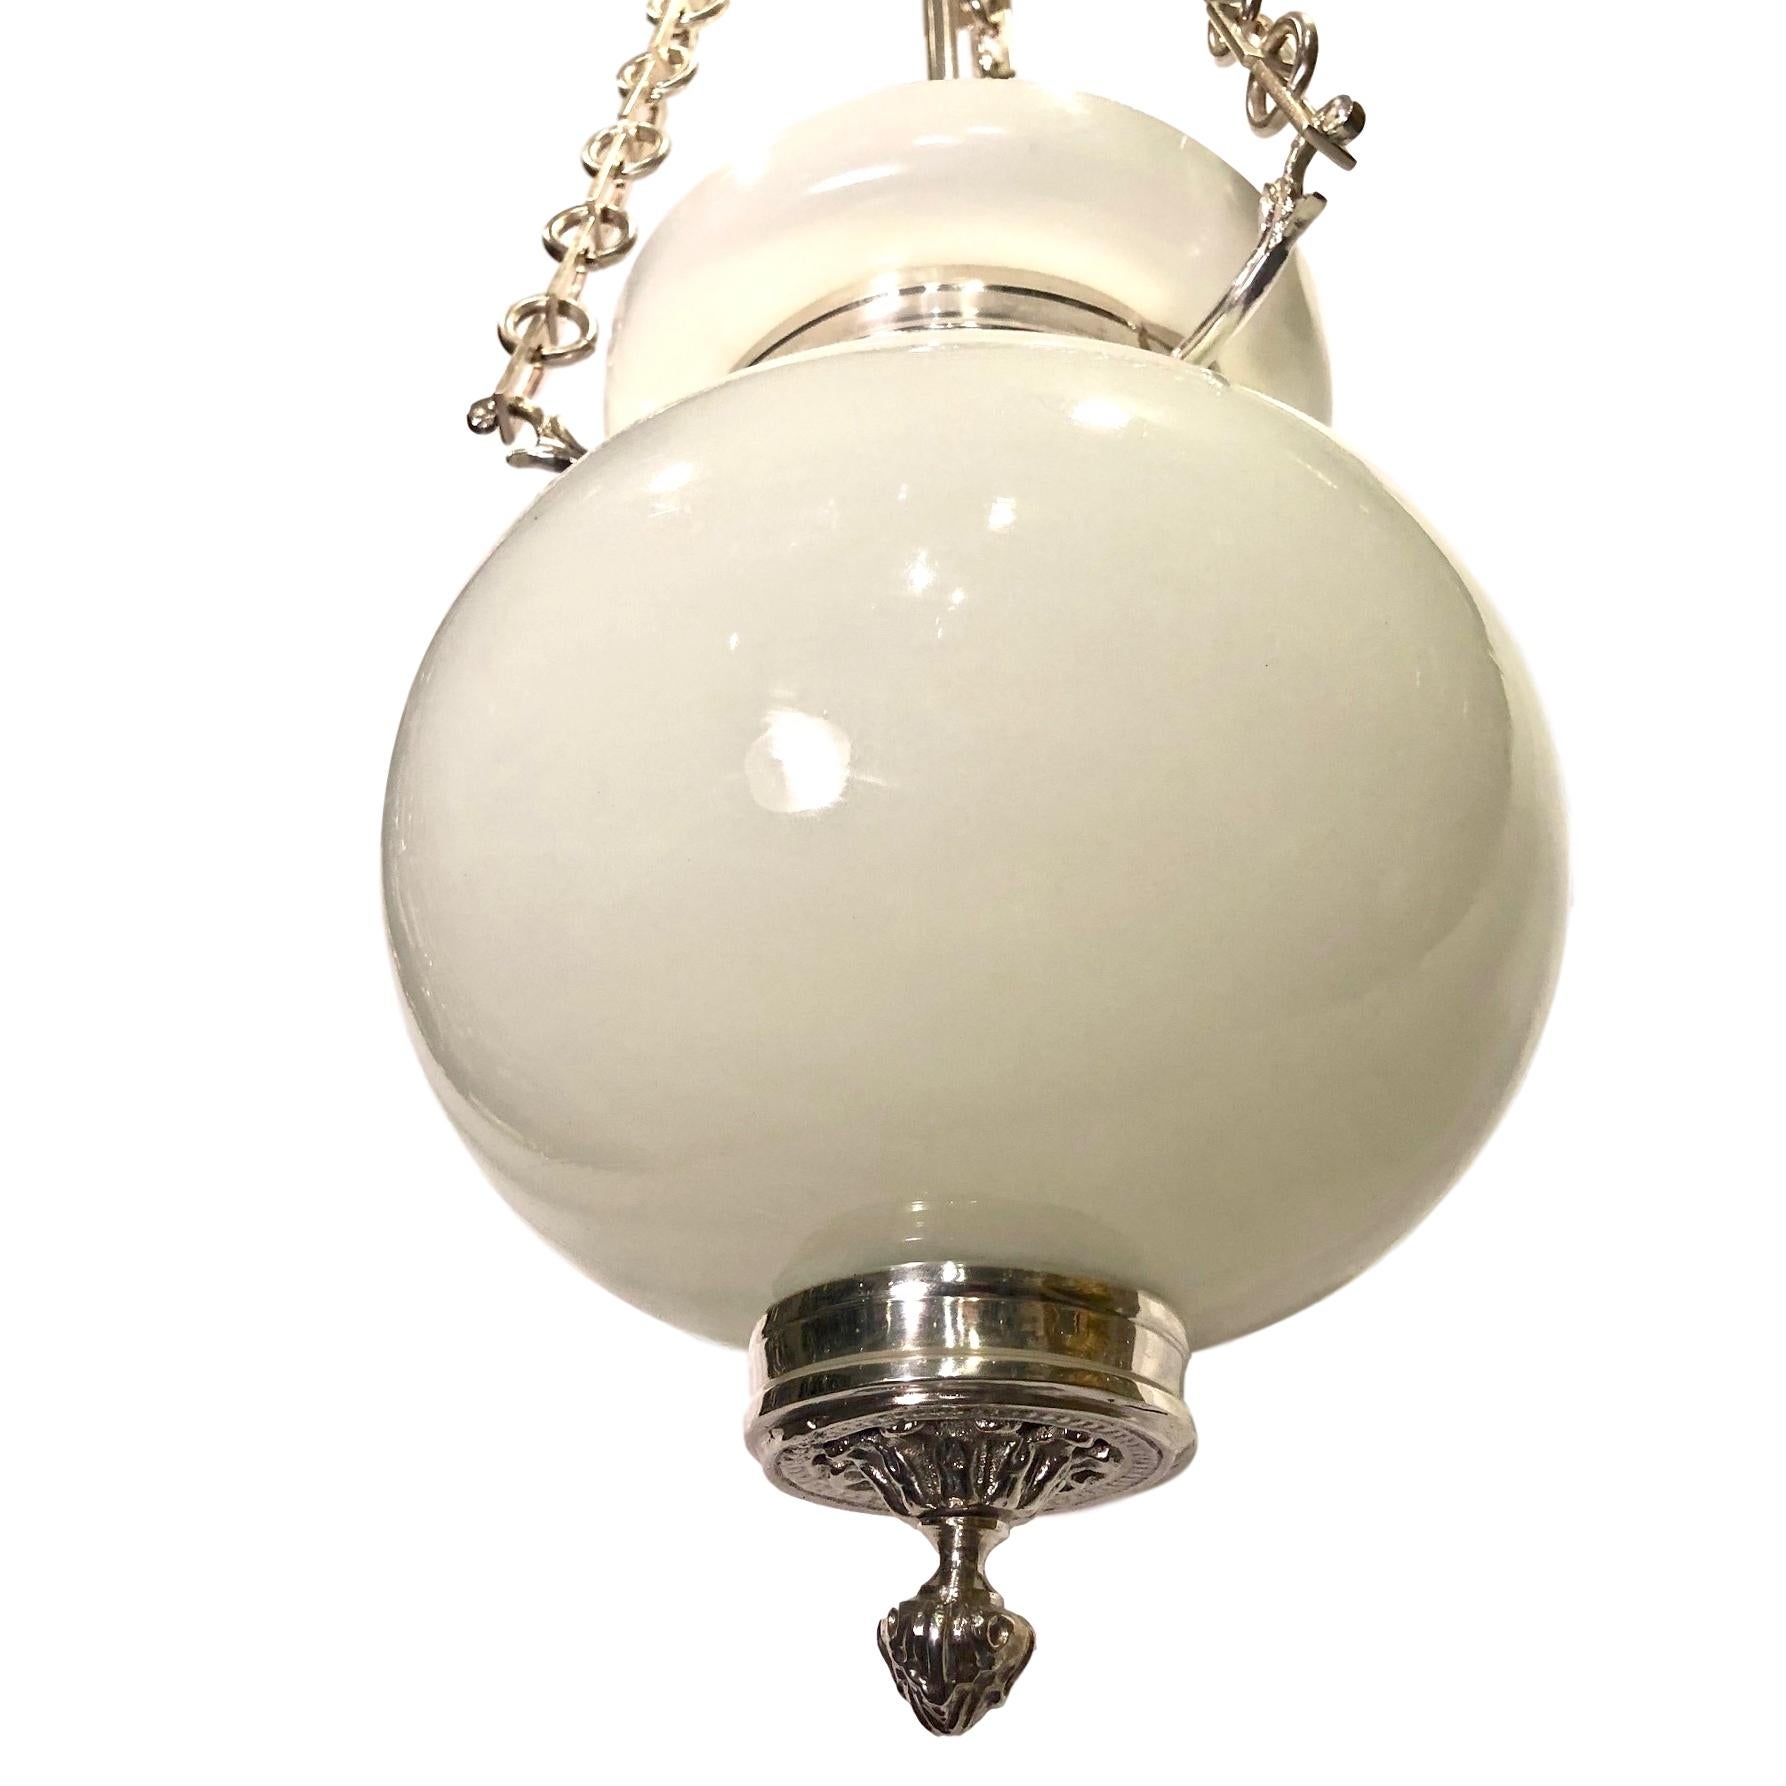 Early 20th Century English Milk Glass Lantern